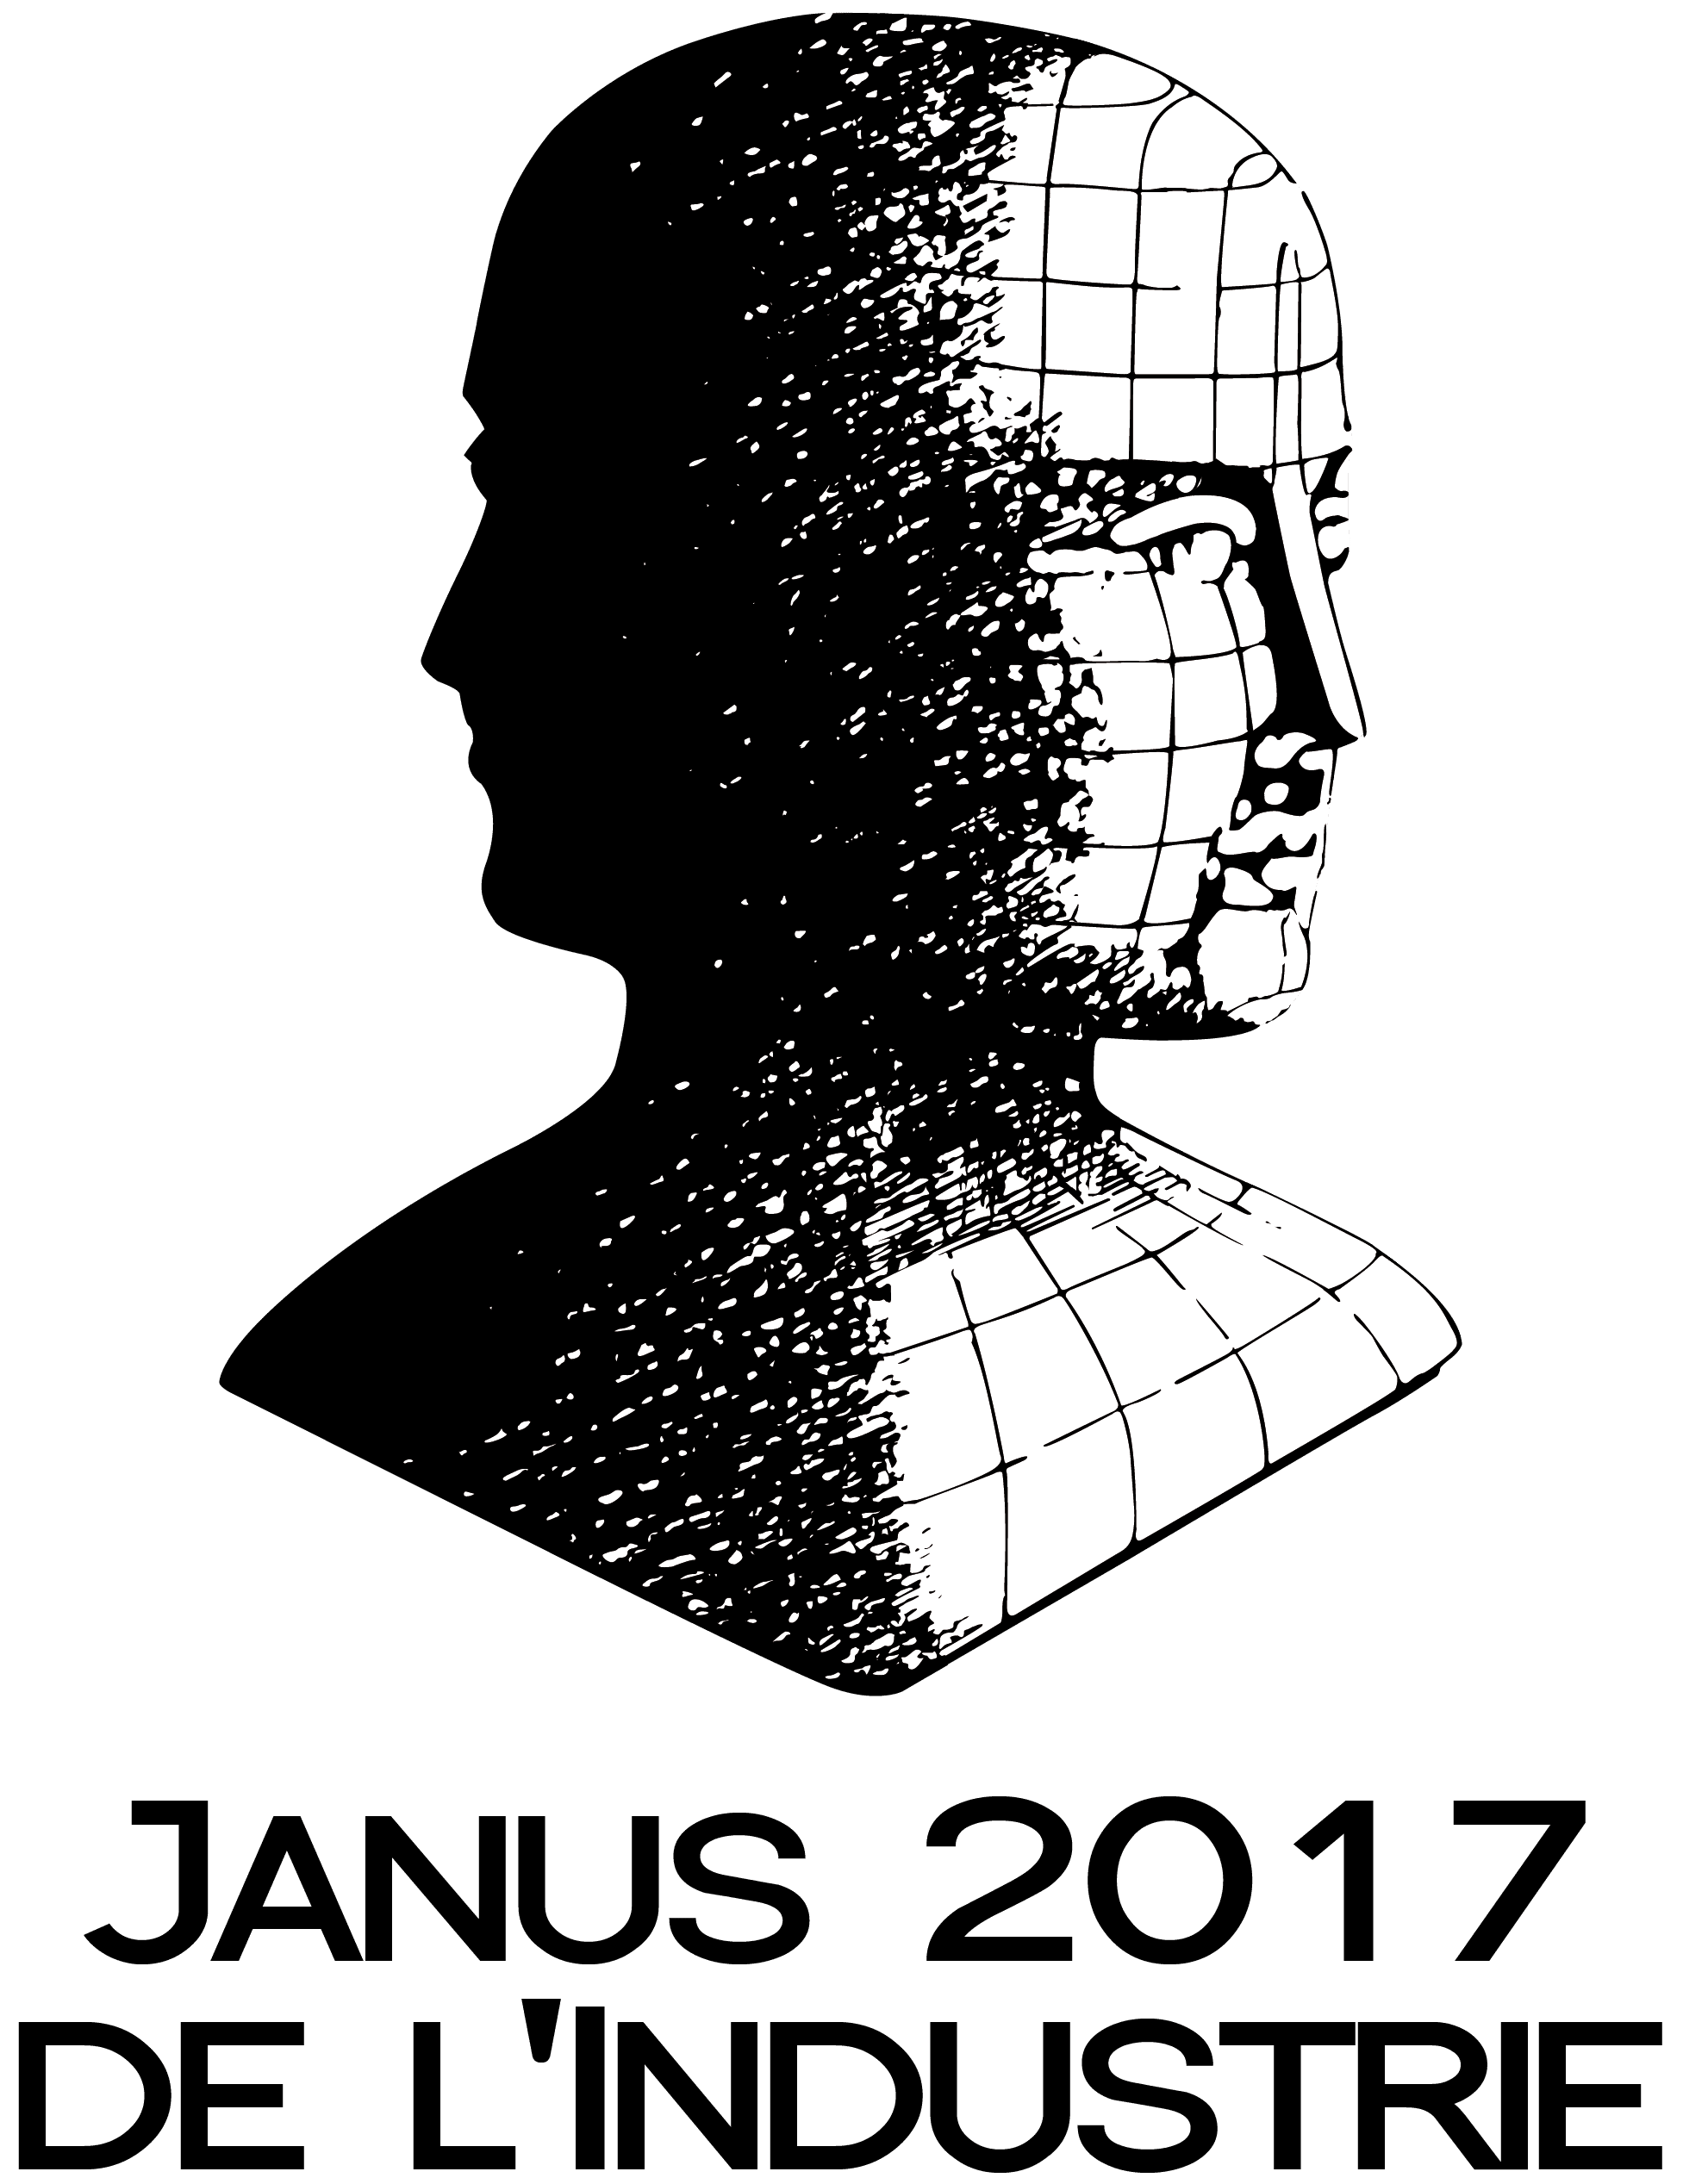 Janus2017-INDUSTRIE_NOIR